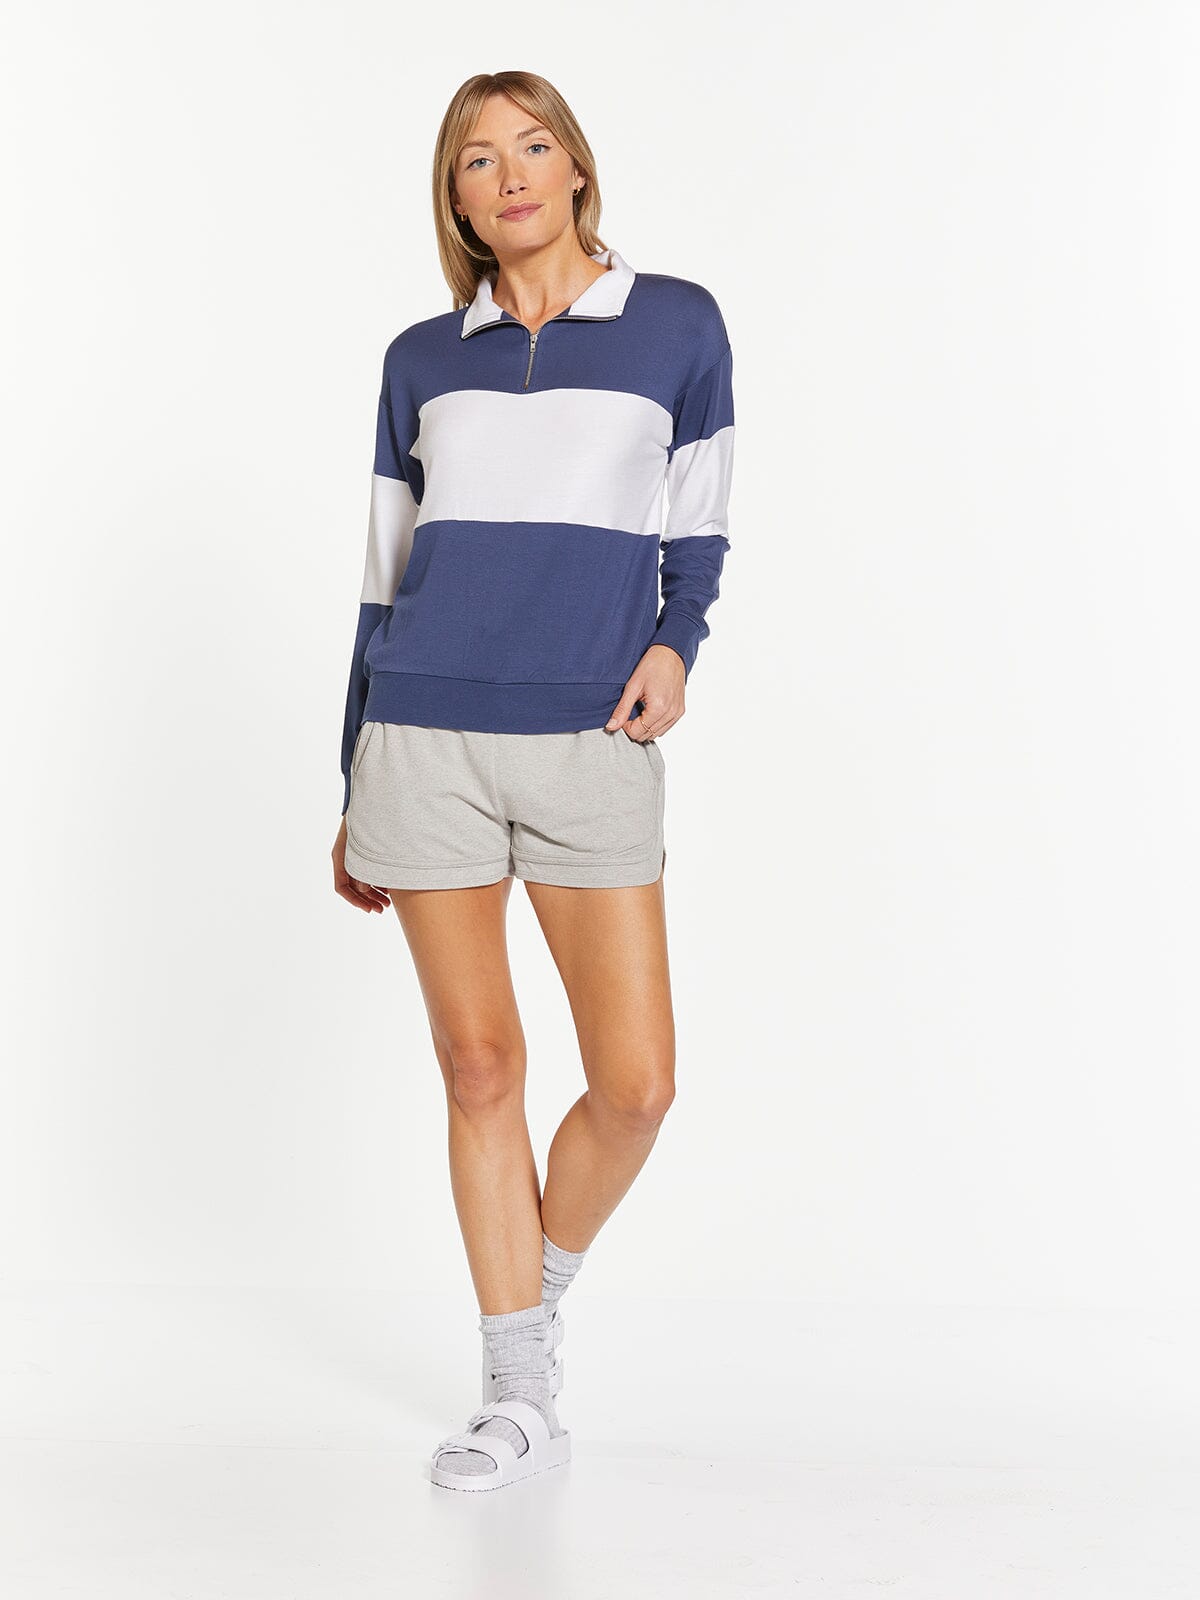 Thread & Supply Rugger Shirt blue and white stripe